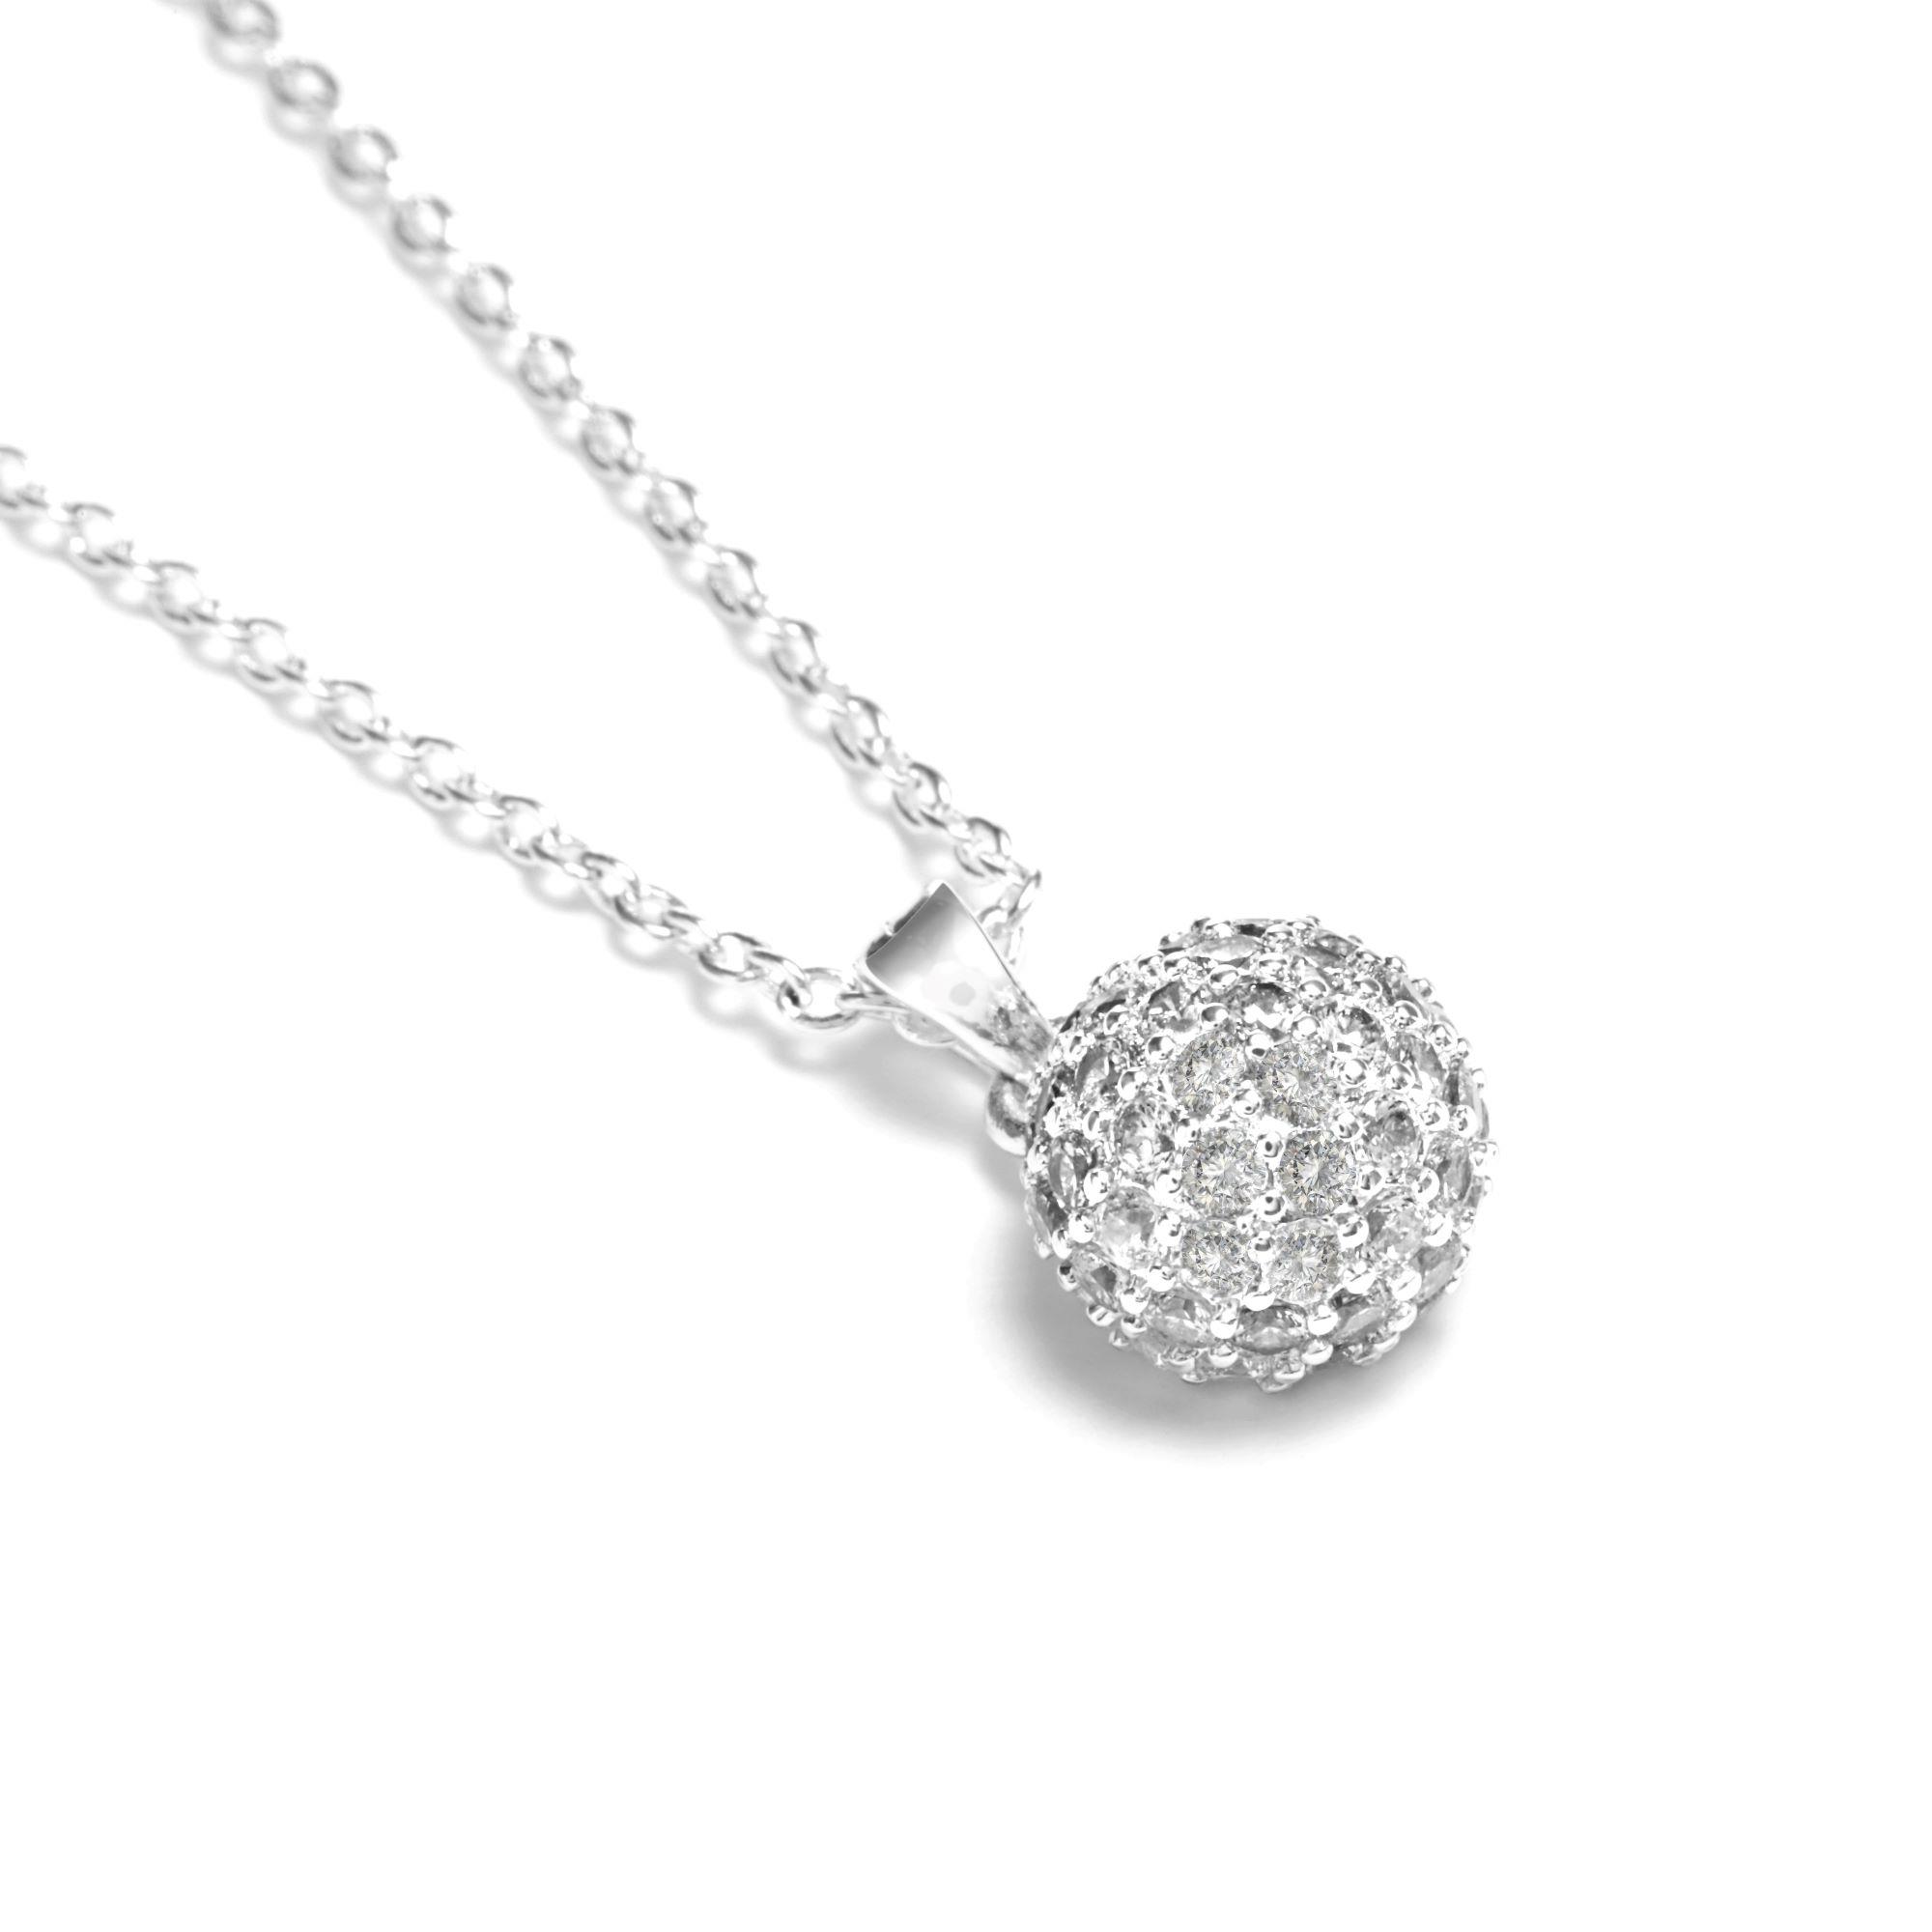 Necklace silver CZ, RMB 599.00 